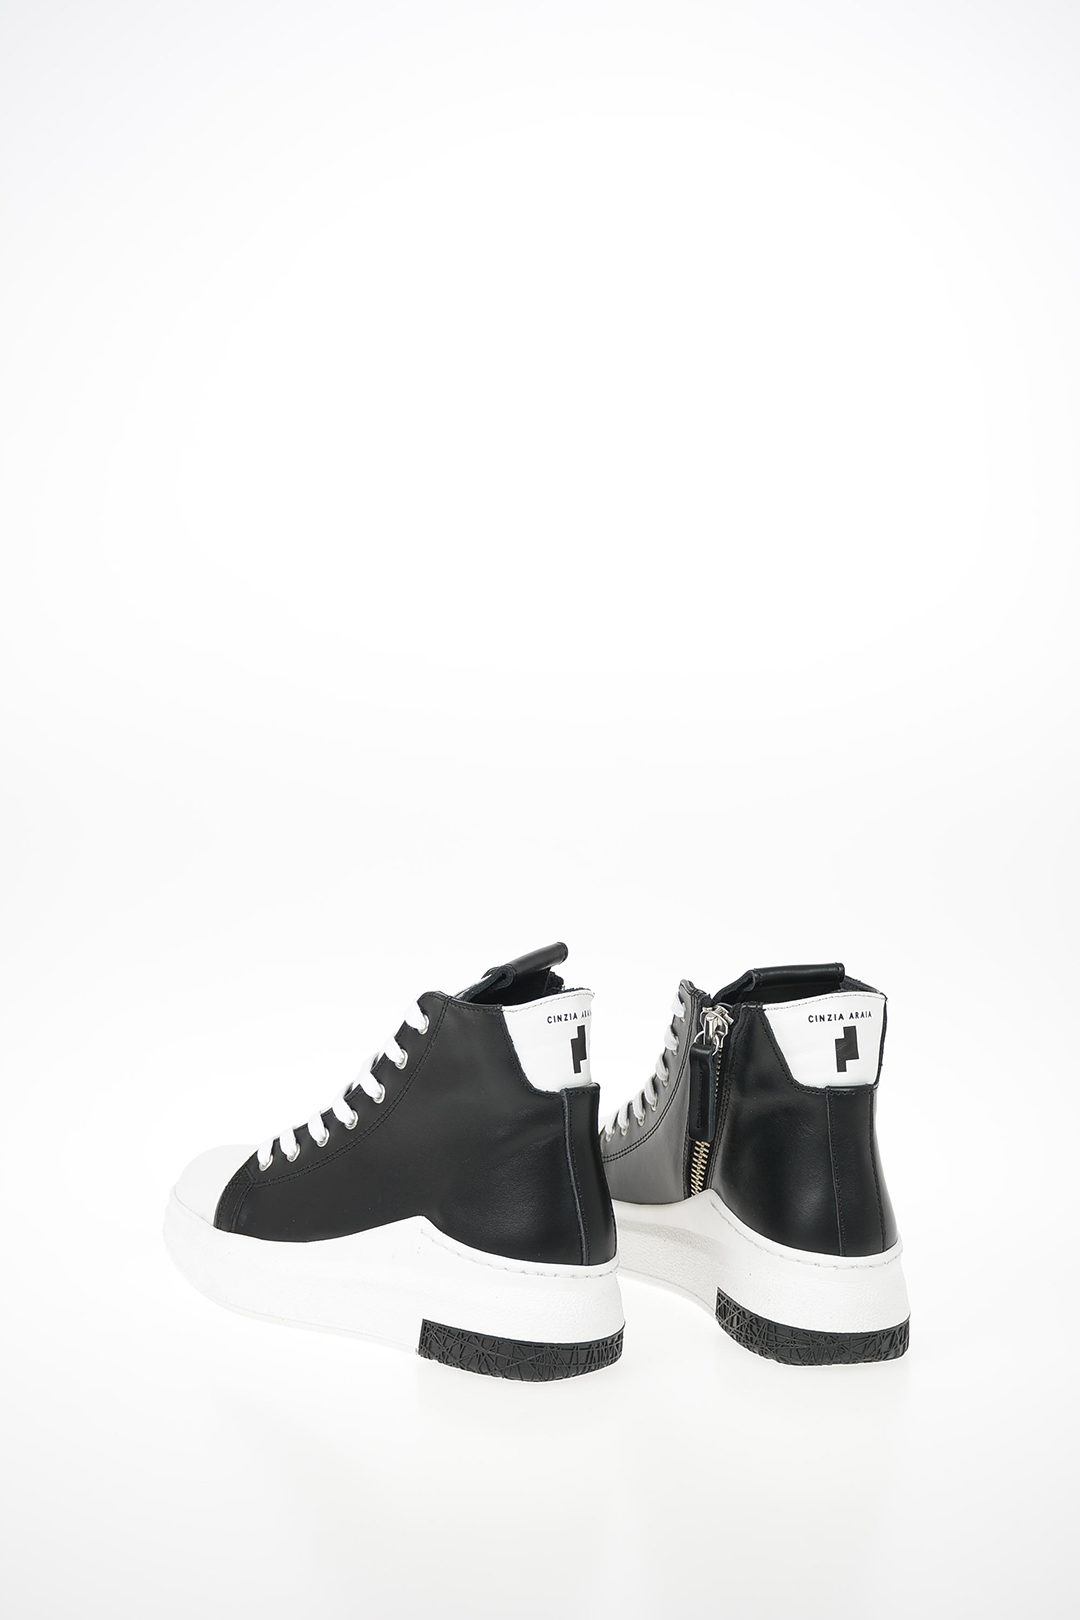 Cinzia Araia Leather ARAIA 74 High Top Sneakers women - Glamood Outlet